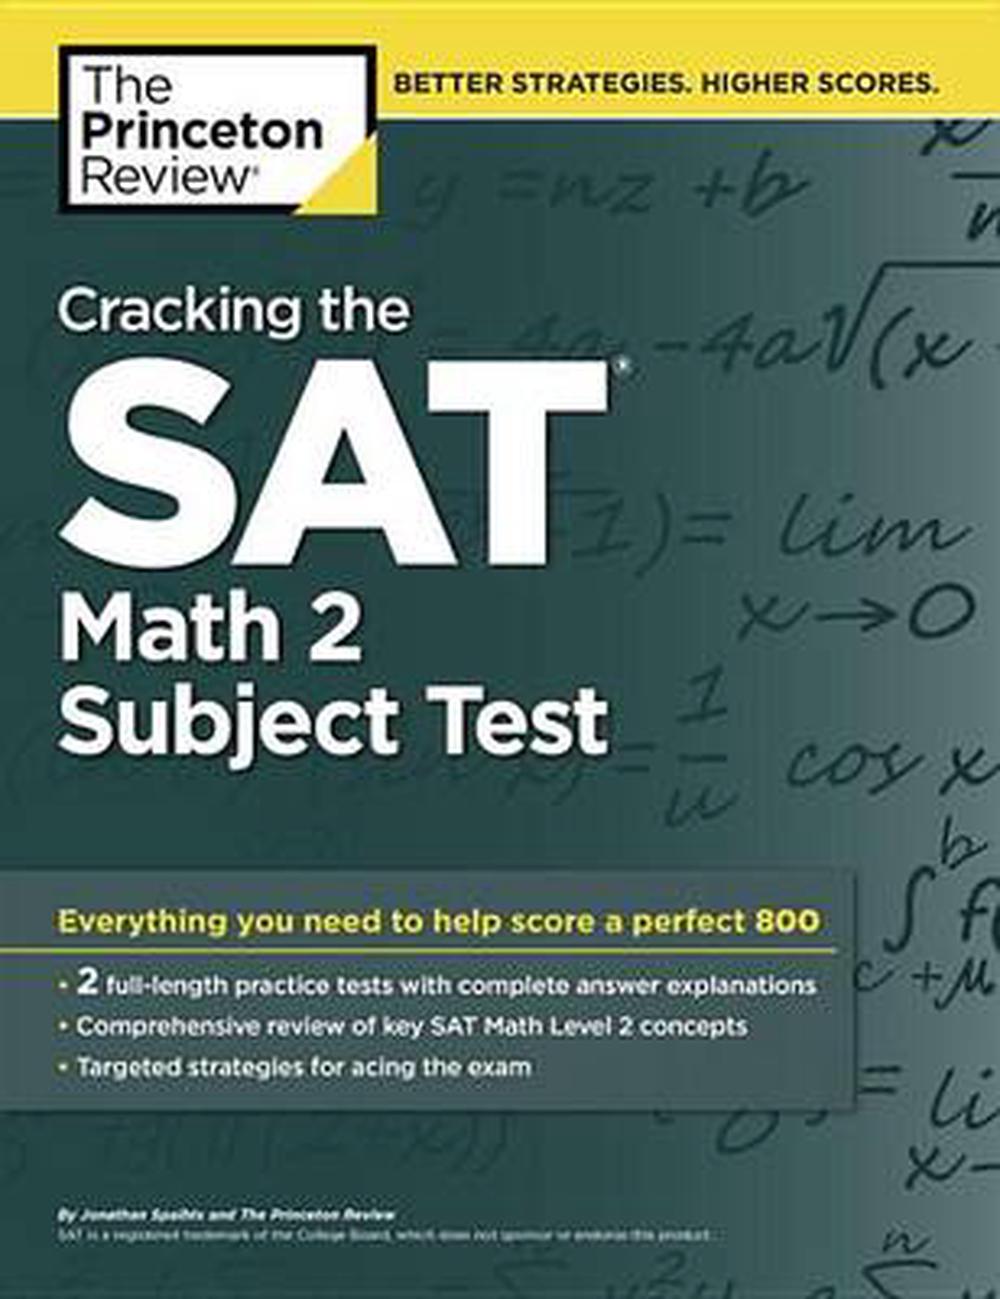 free sat math practice test